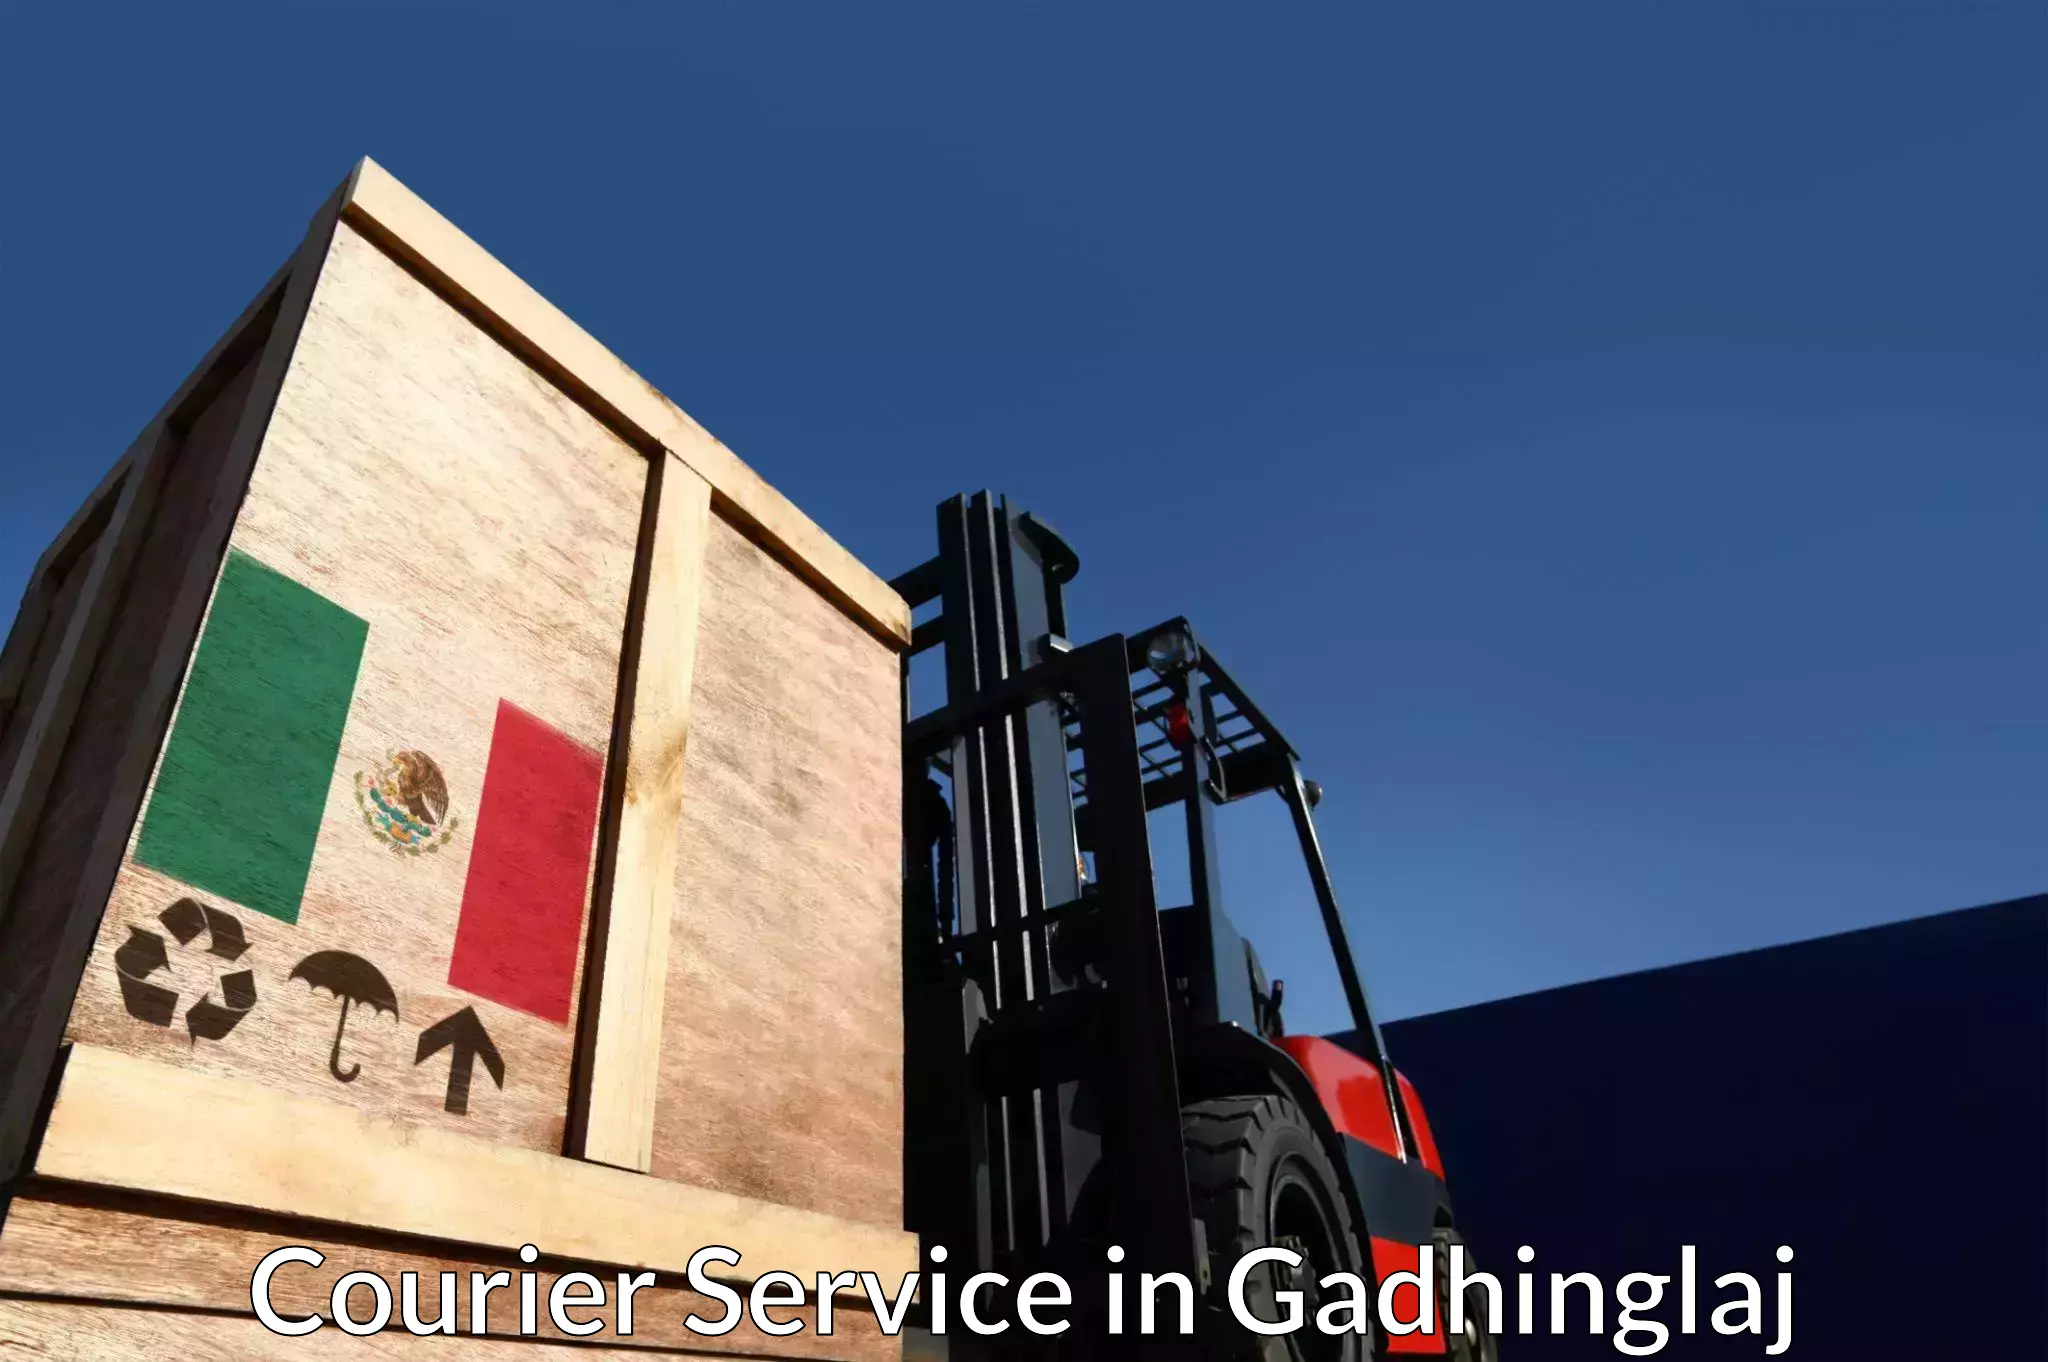 Customer-friendly courier services in Gadhinglaj